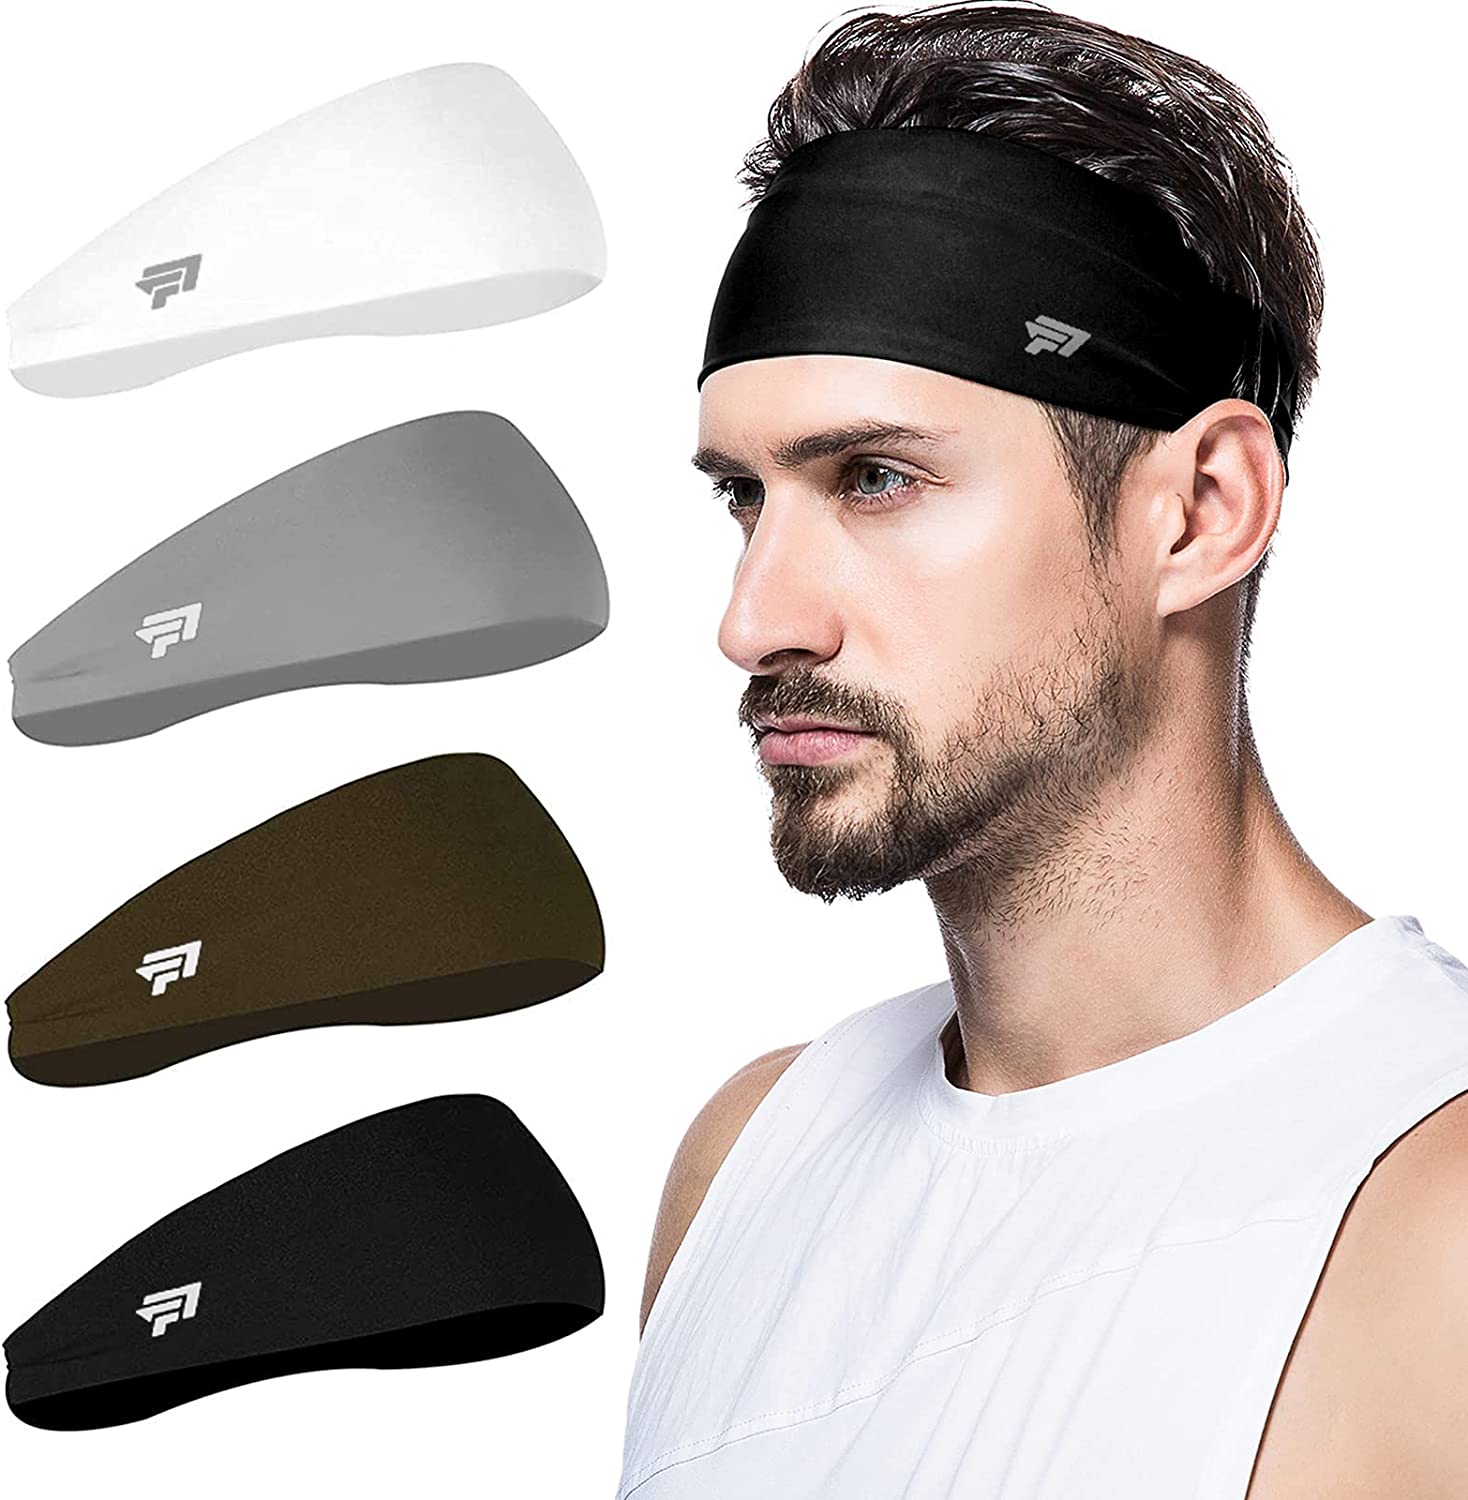 poshei Mens Headband (4 Pack), Mens Sweatband & Sports Headband for Running, Cycling, Yoga, Basketball - Stretchy Moisture Wicking Hairband